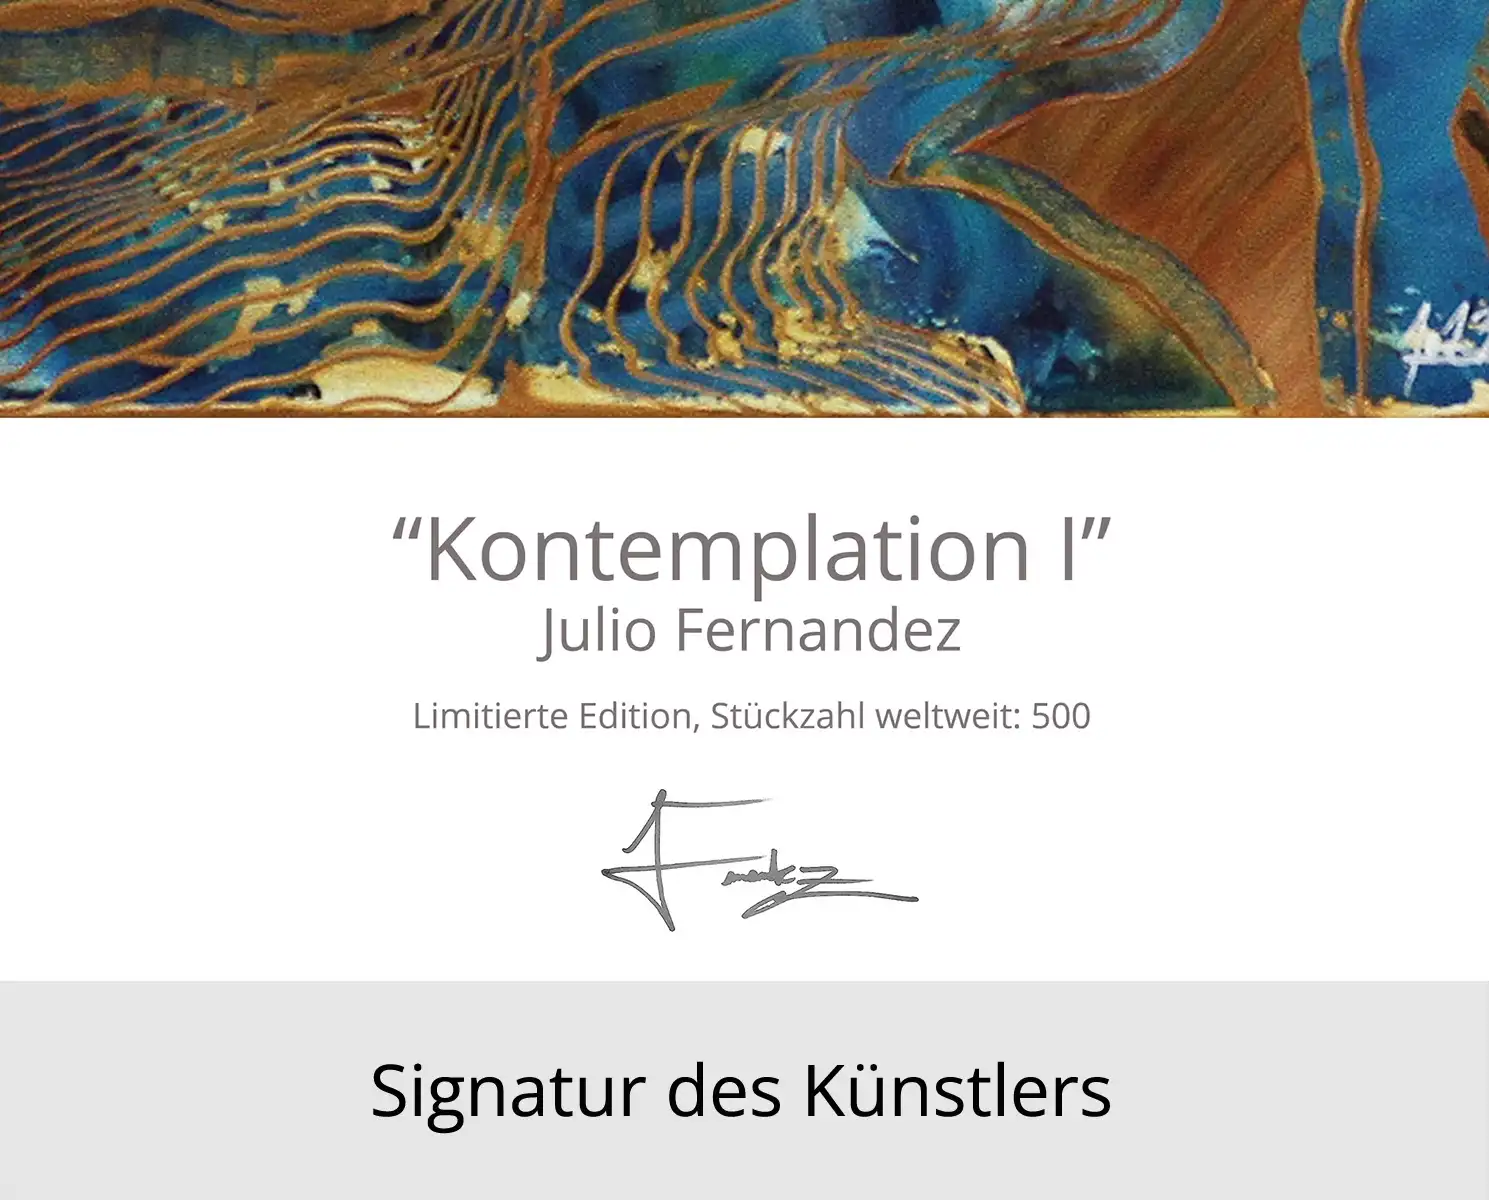 Limitierte Edition auf Papier, J. Fernandez "Kontemplation I", Fineartprint, Kollektion E&K